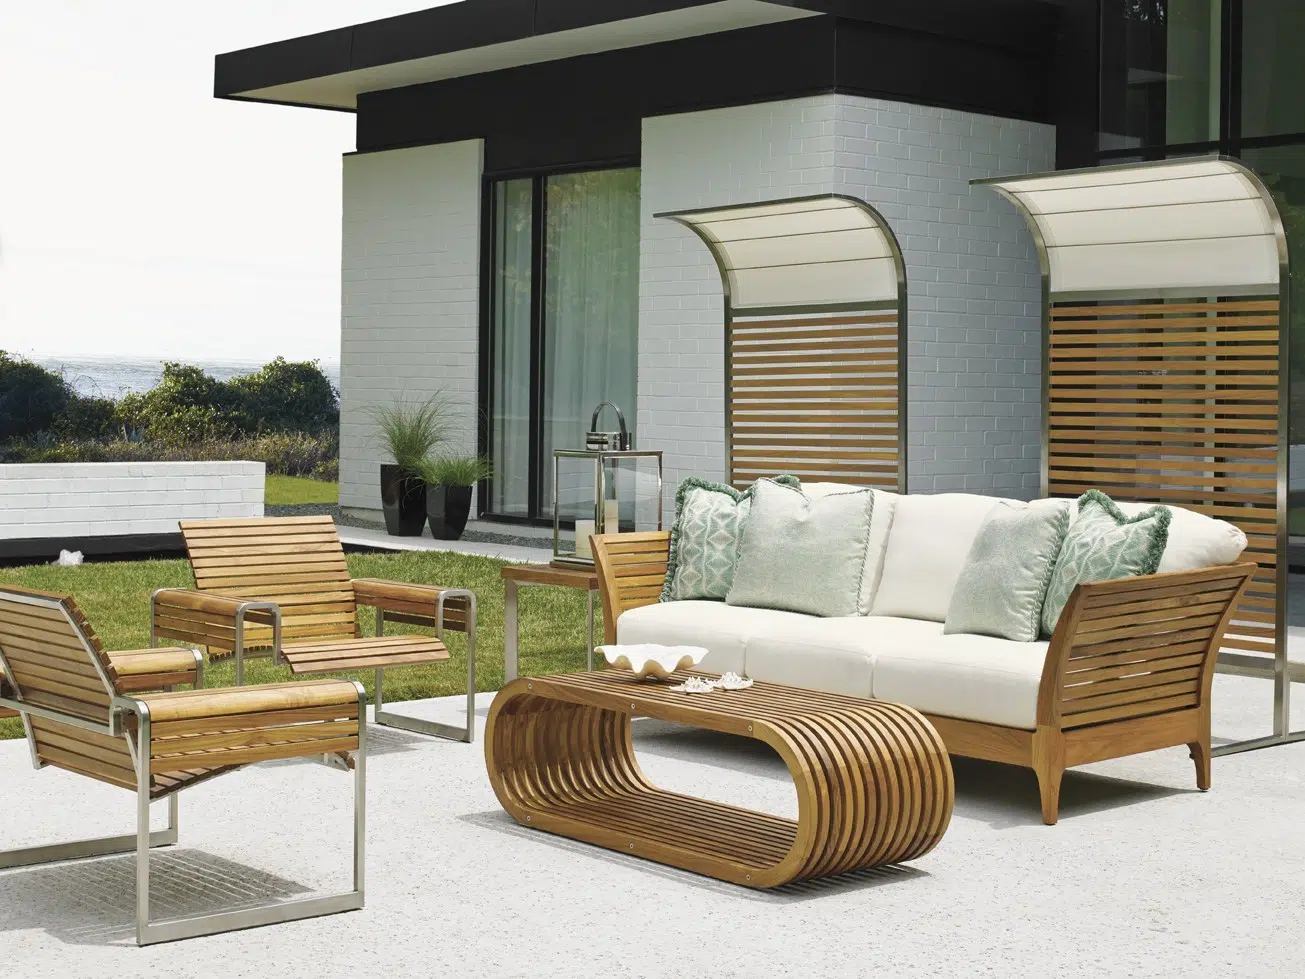 Tommy Bahama Outdoor tres chic teak outdoor furniturenbsp - Hausers Pationbsp